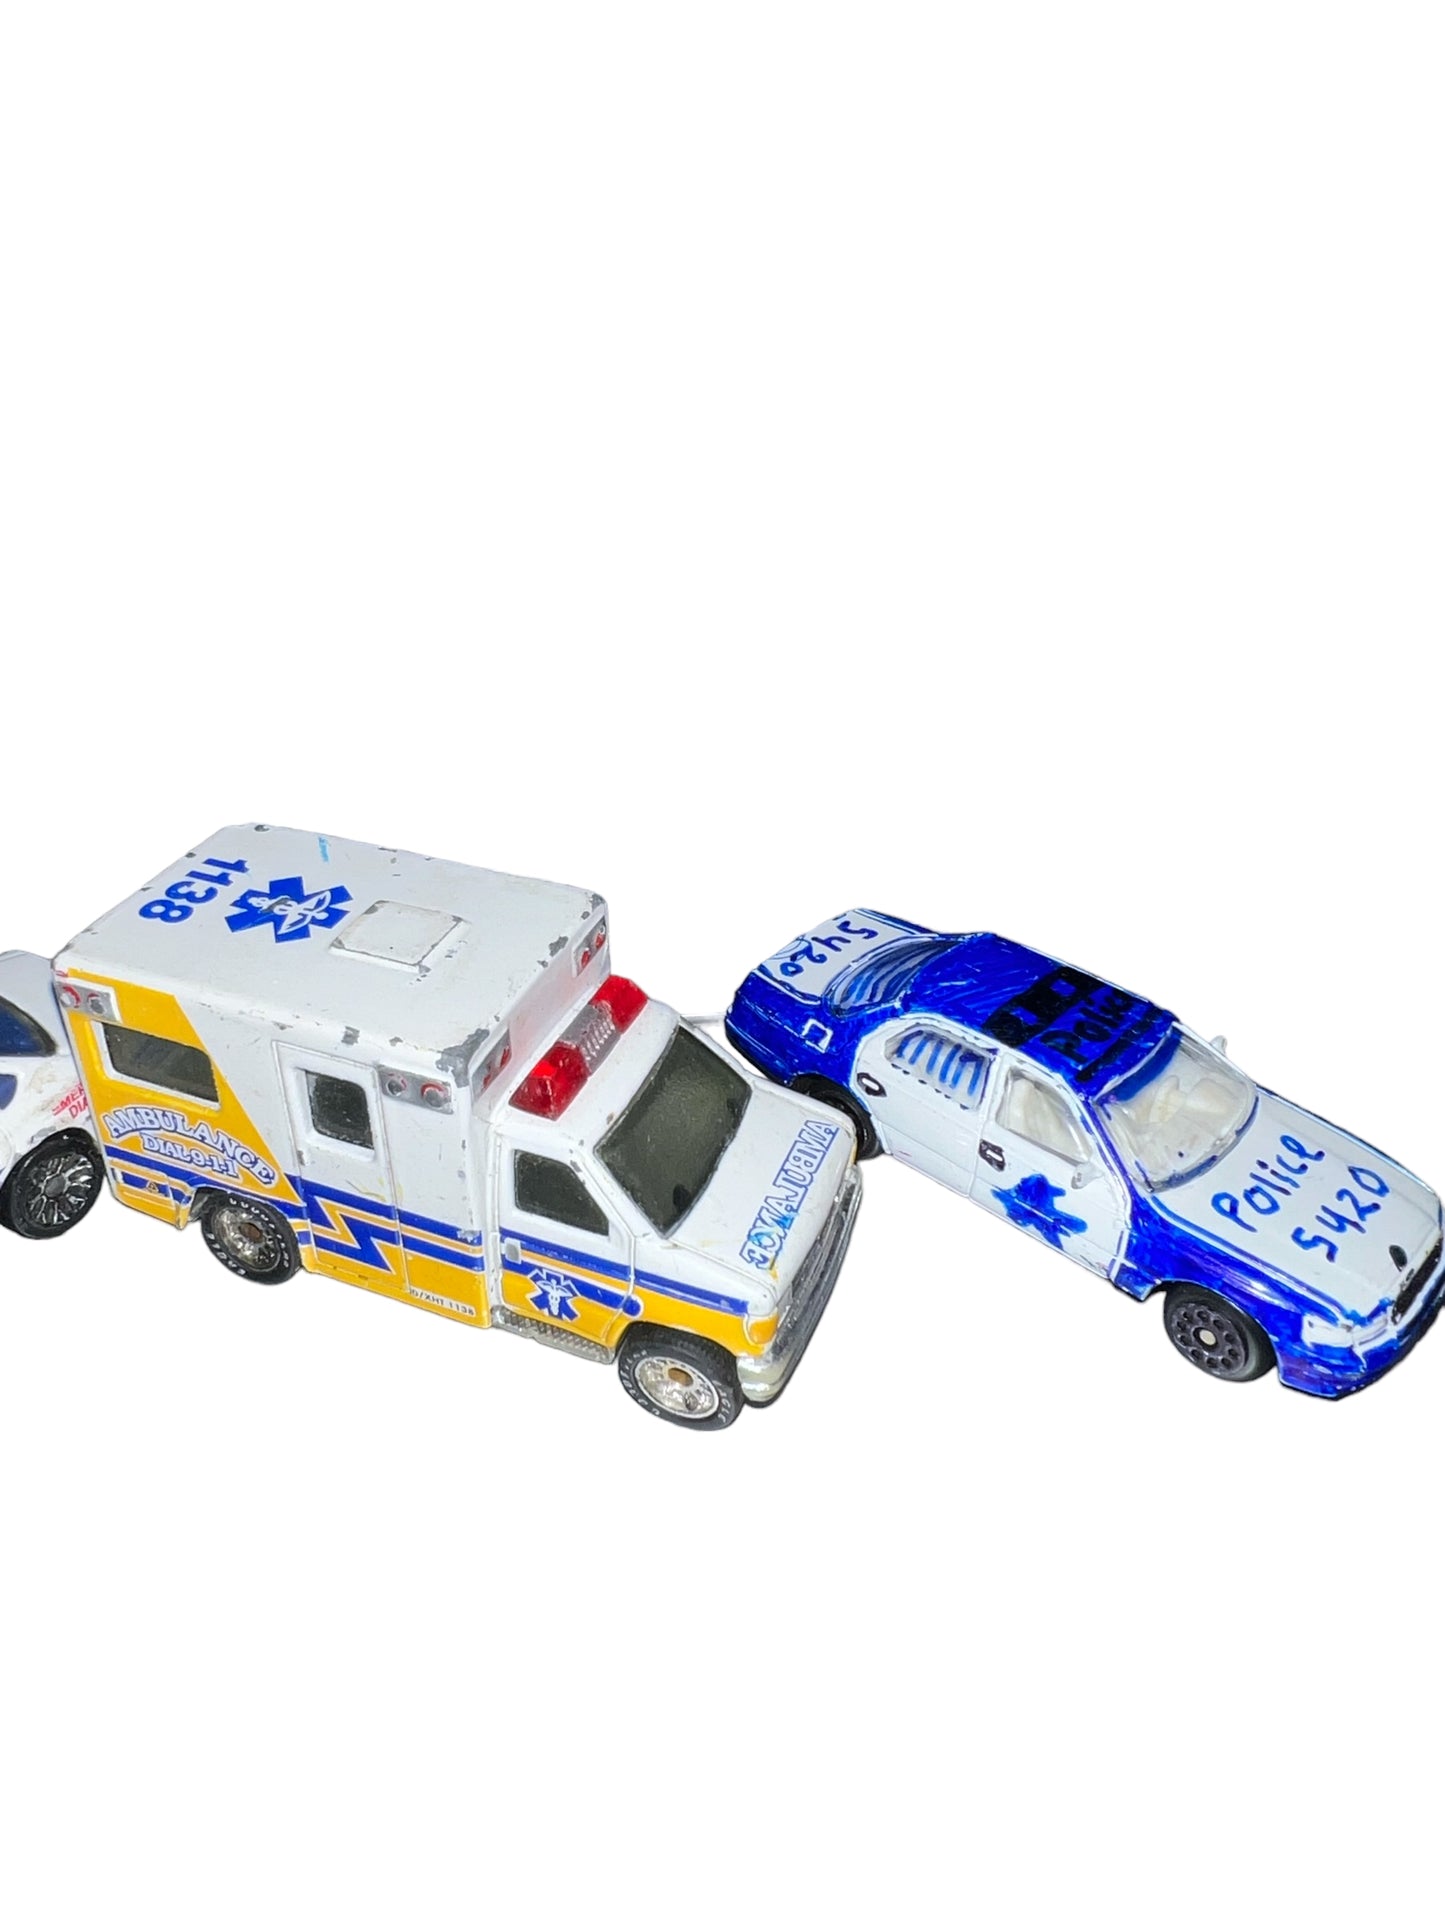 EMS Ambulance Matchbox Mattel Police Chevrolet Lot